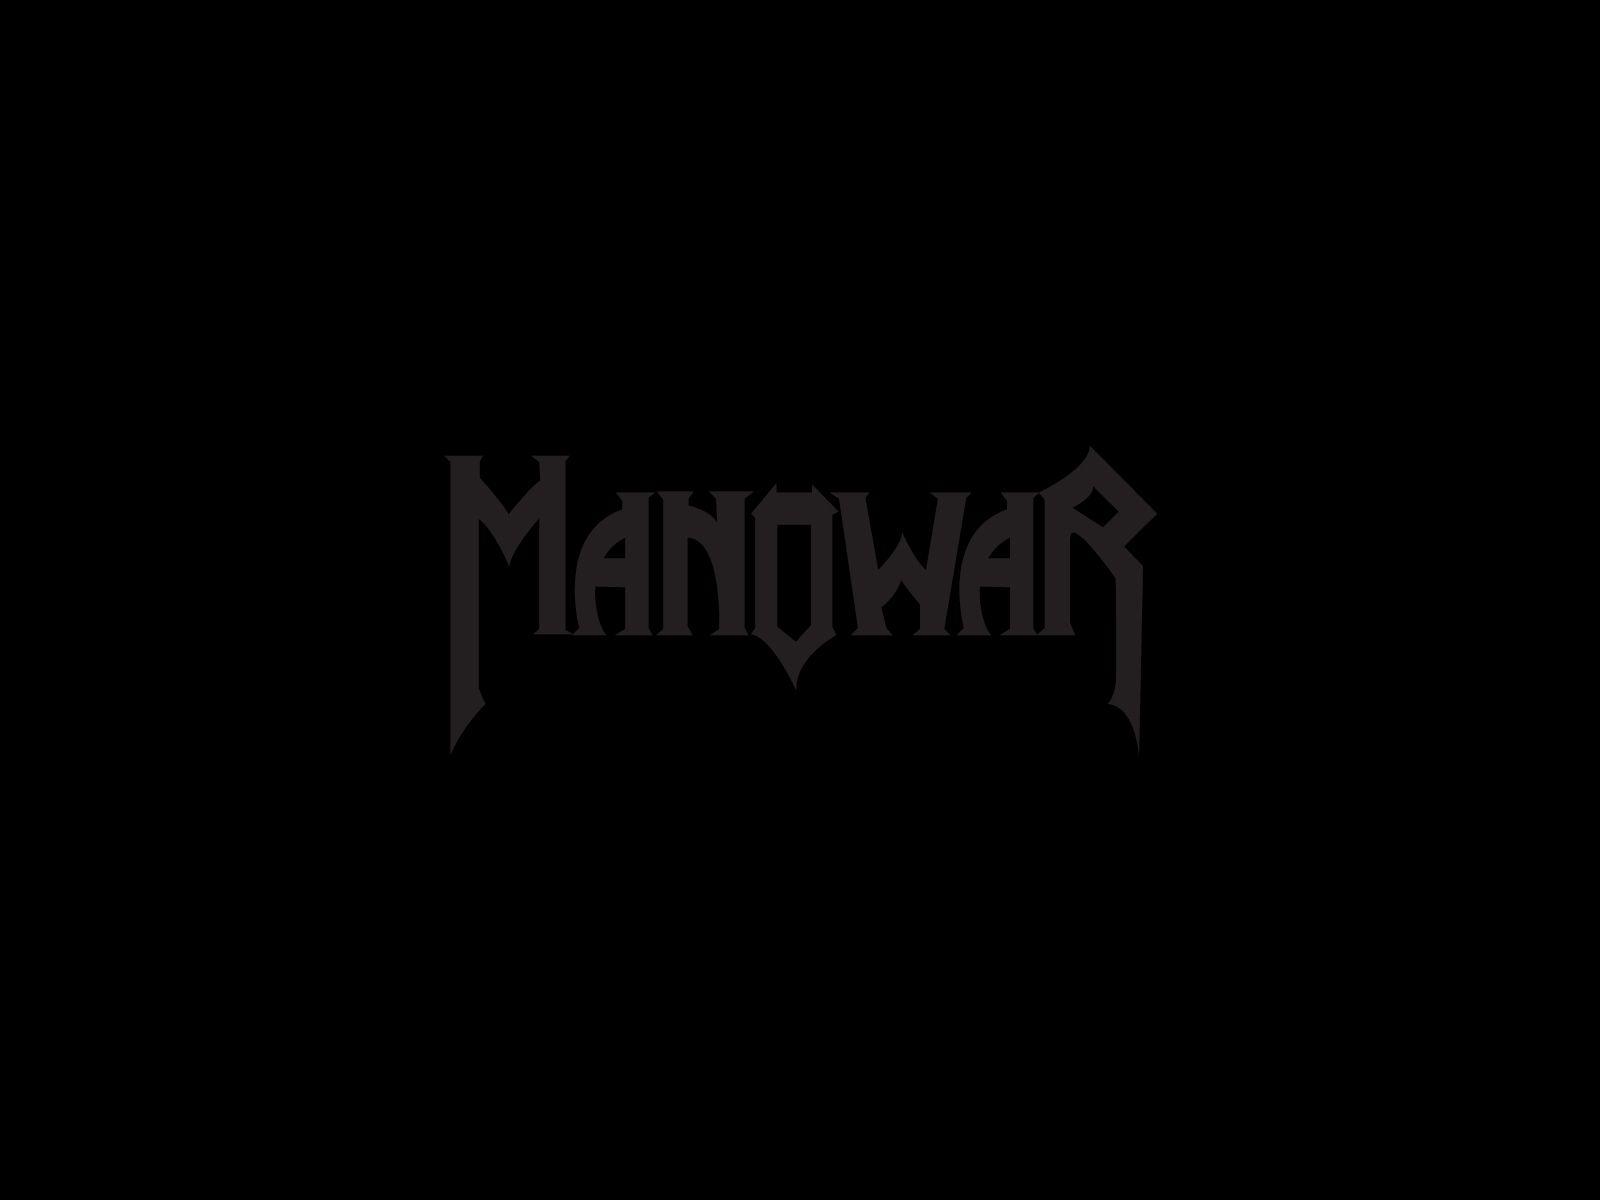 Manowar Wallpaper HD Download